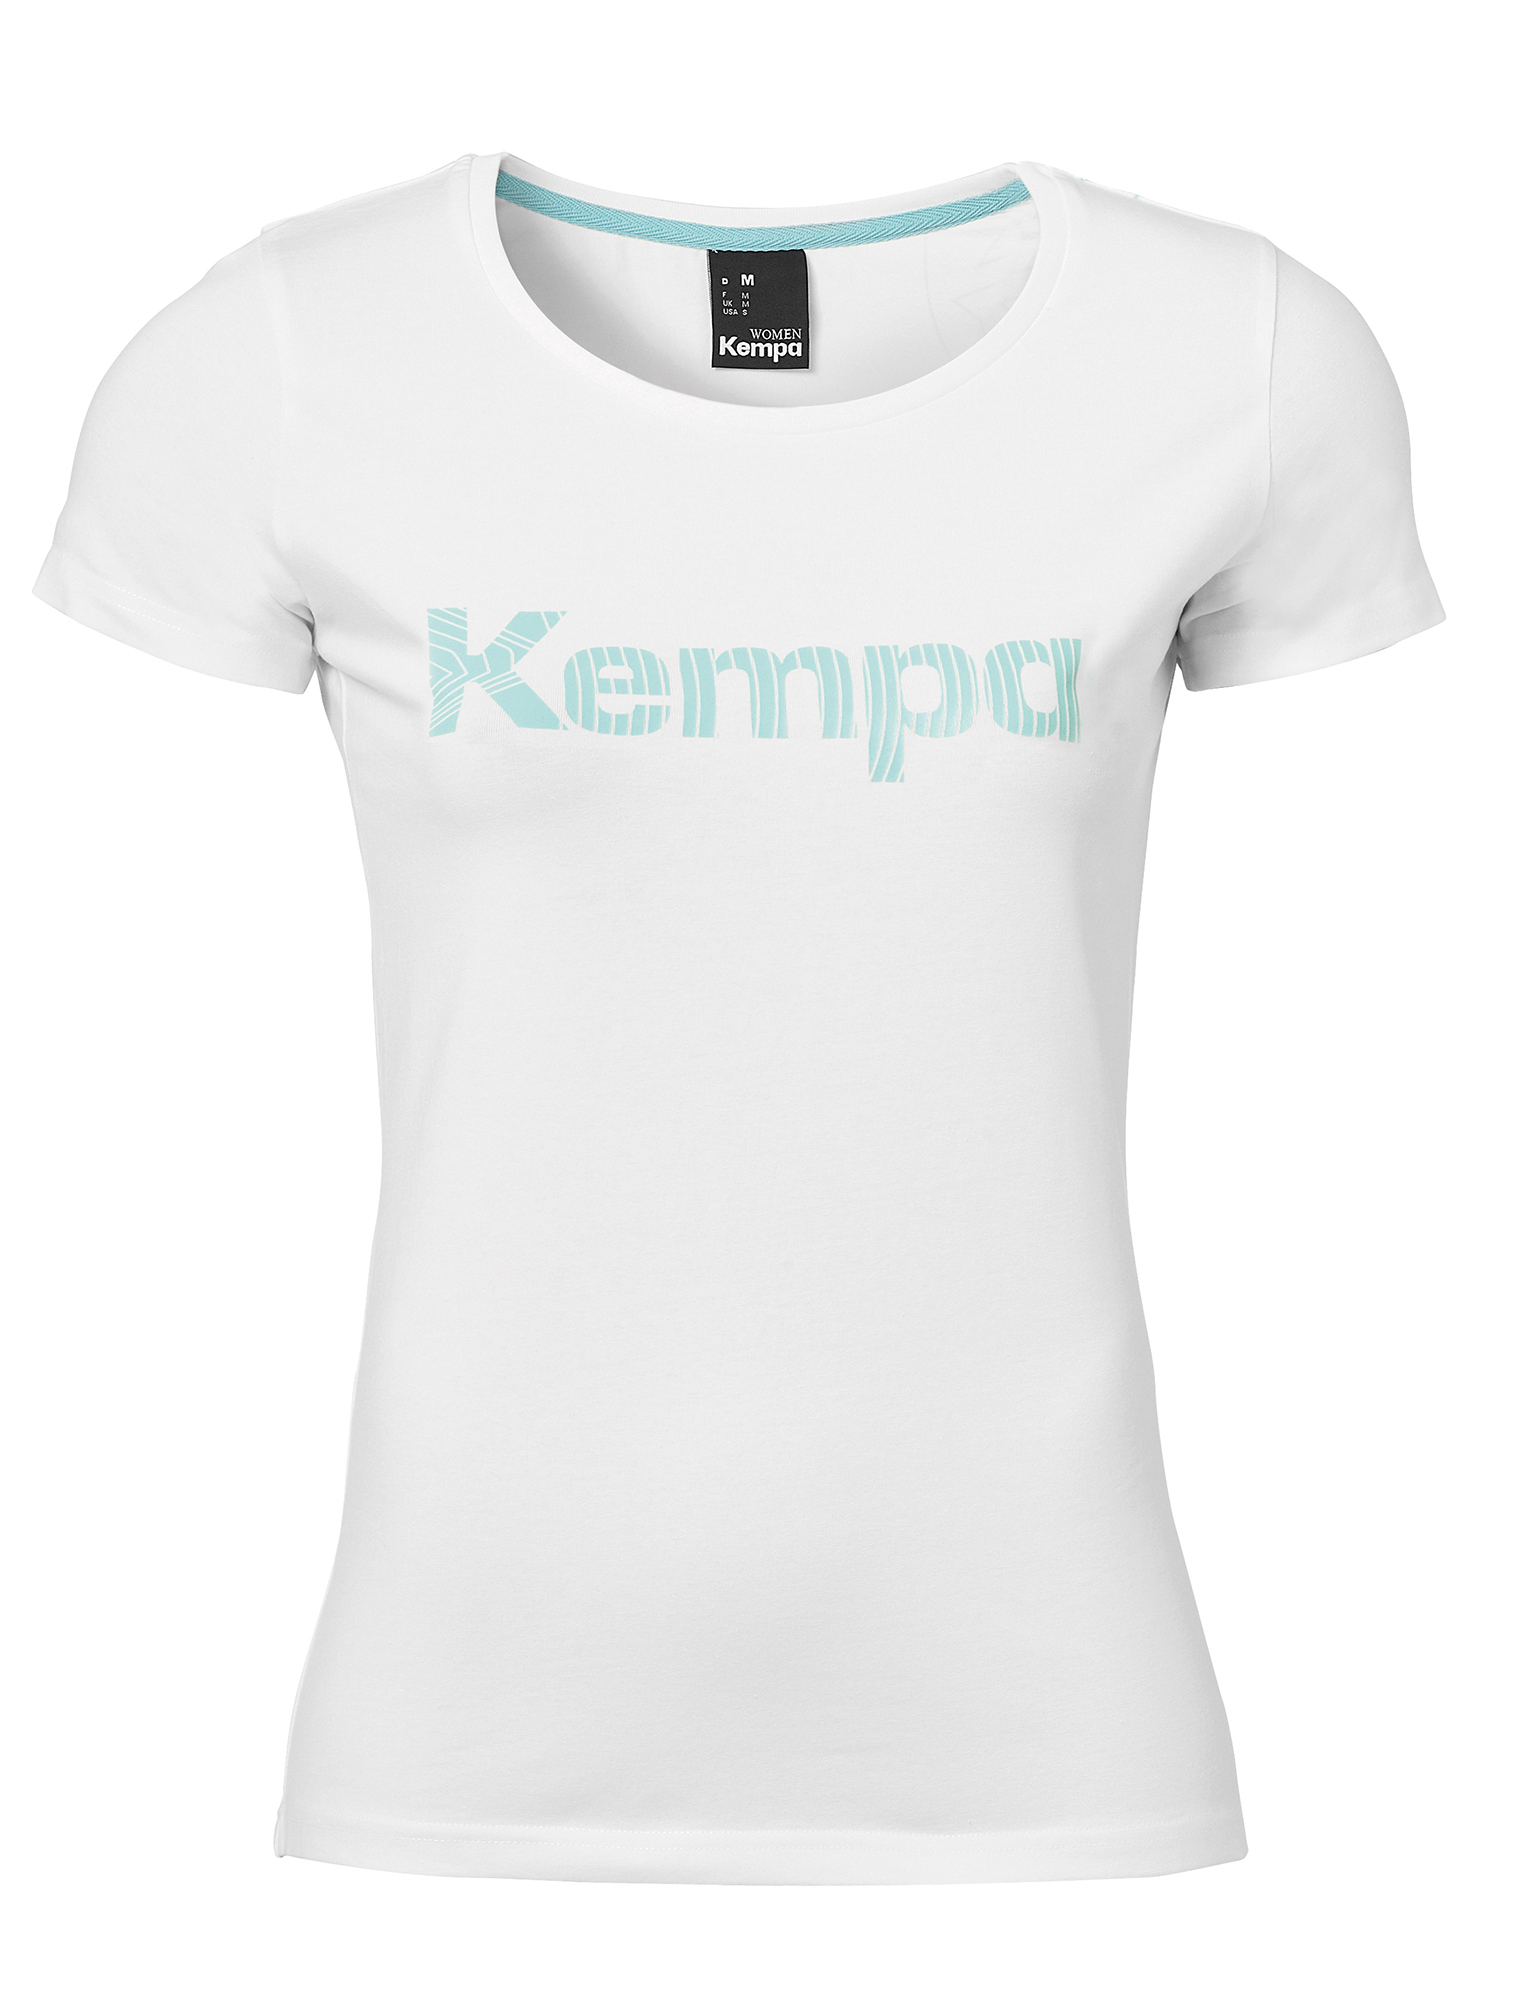 Спортивная футболка Kempa Shirt GRAPHIC WOMEN, белый фото